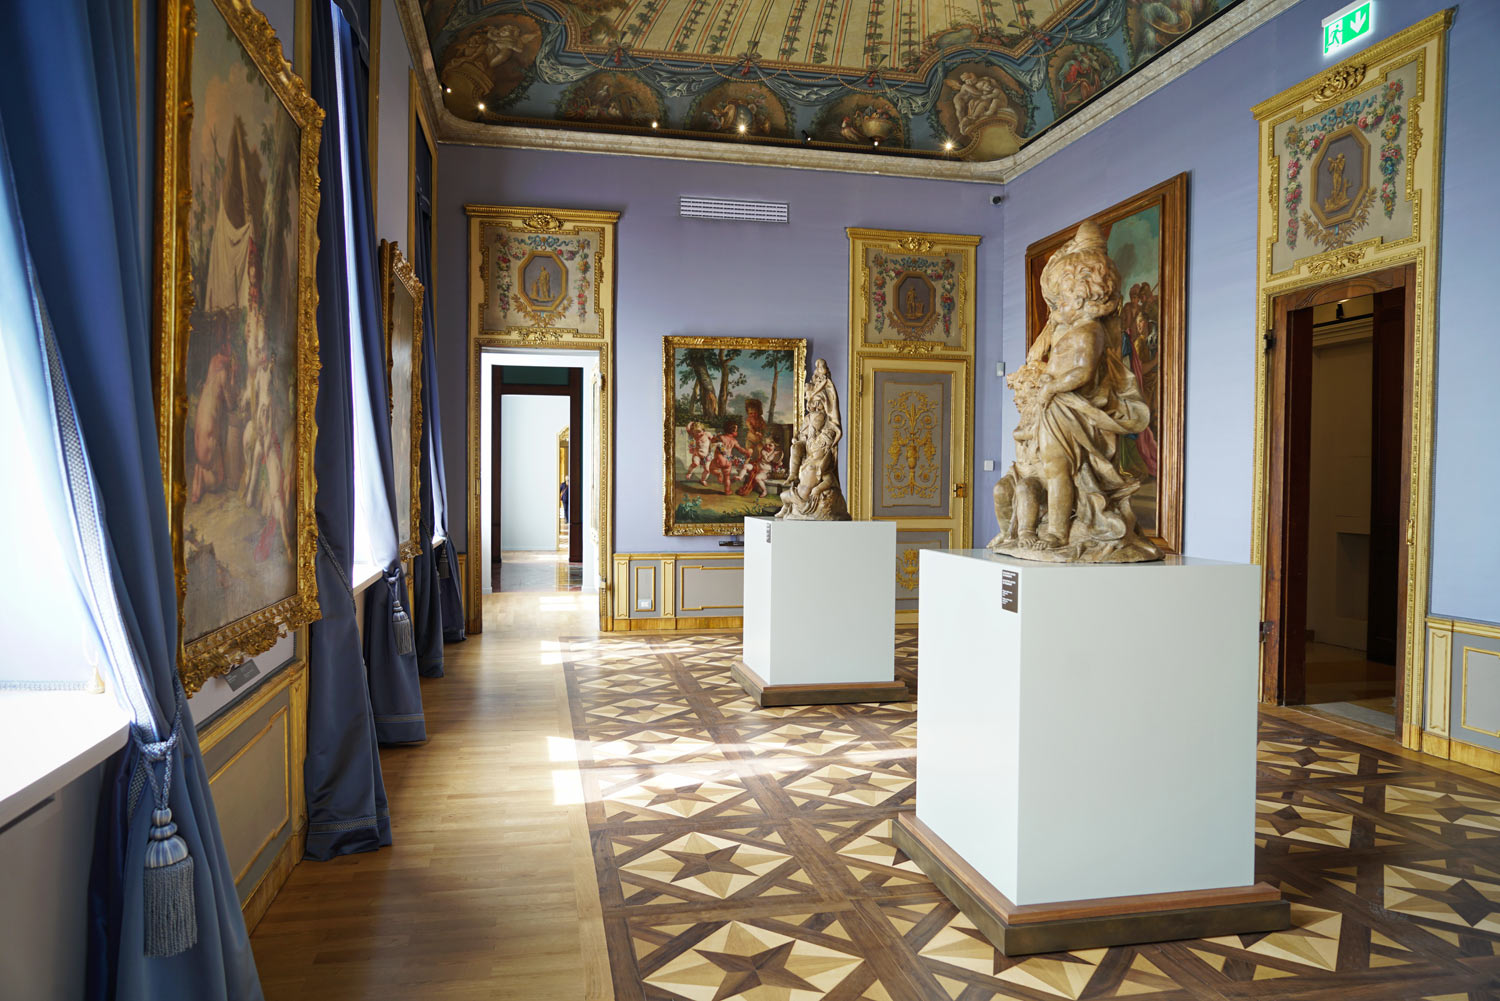 Turin, Italy's new Gallerie d'Italia museum, Palazzo Turinetti, opens with three underground floors